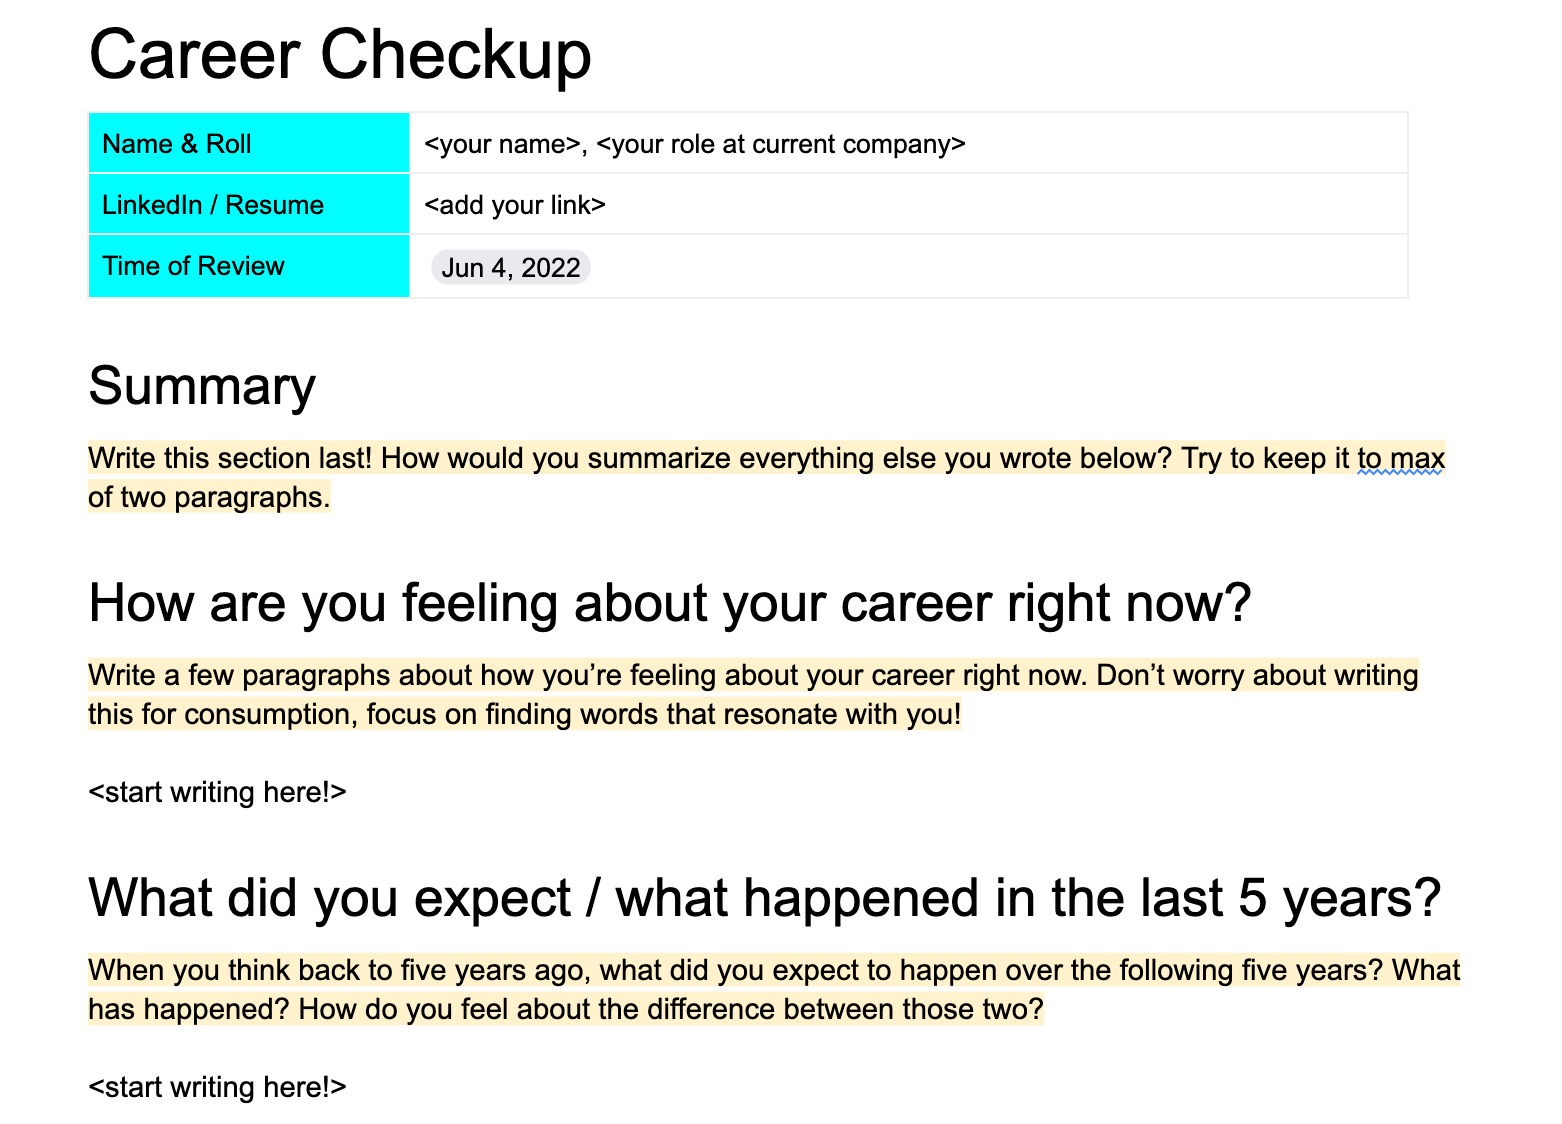 Screenshot of career checkup template on Google docs.